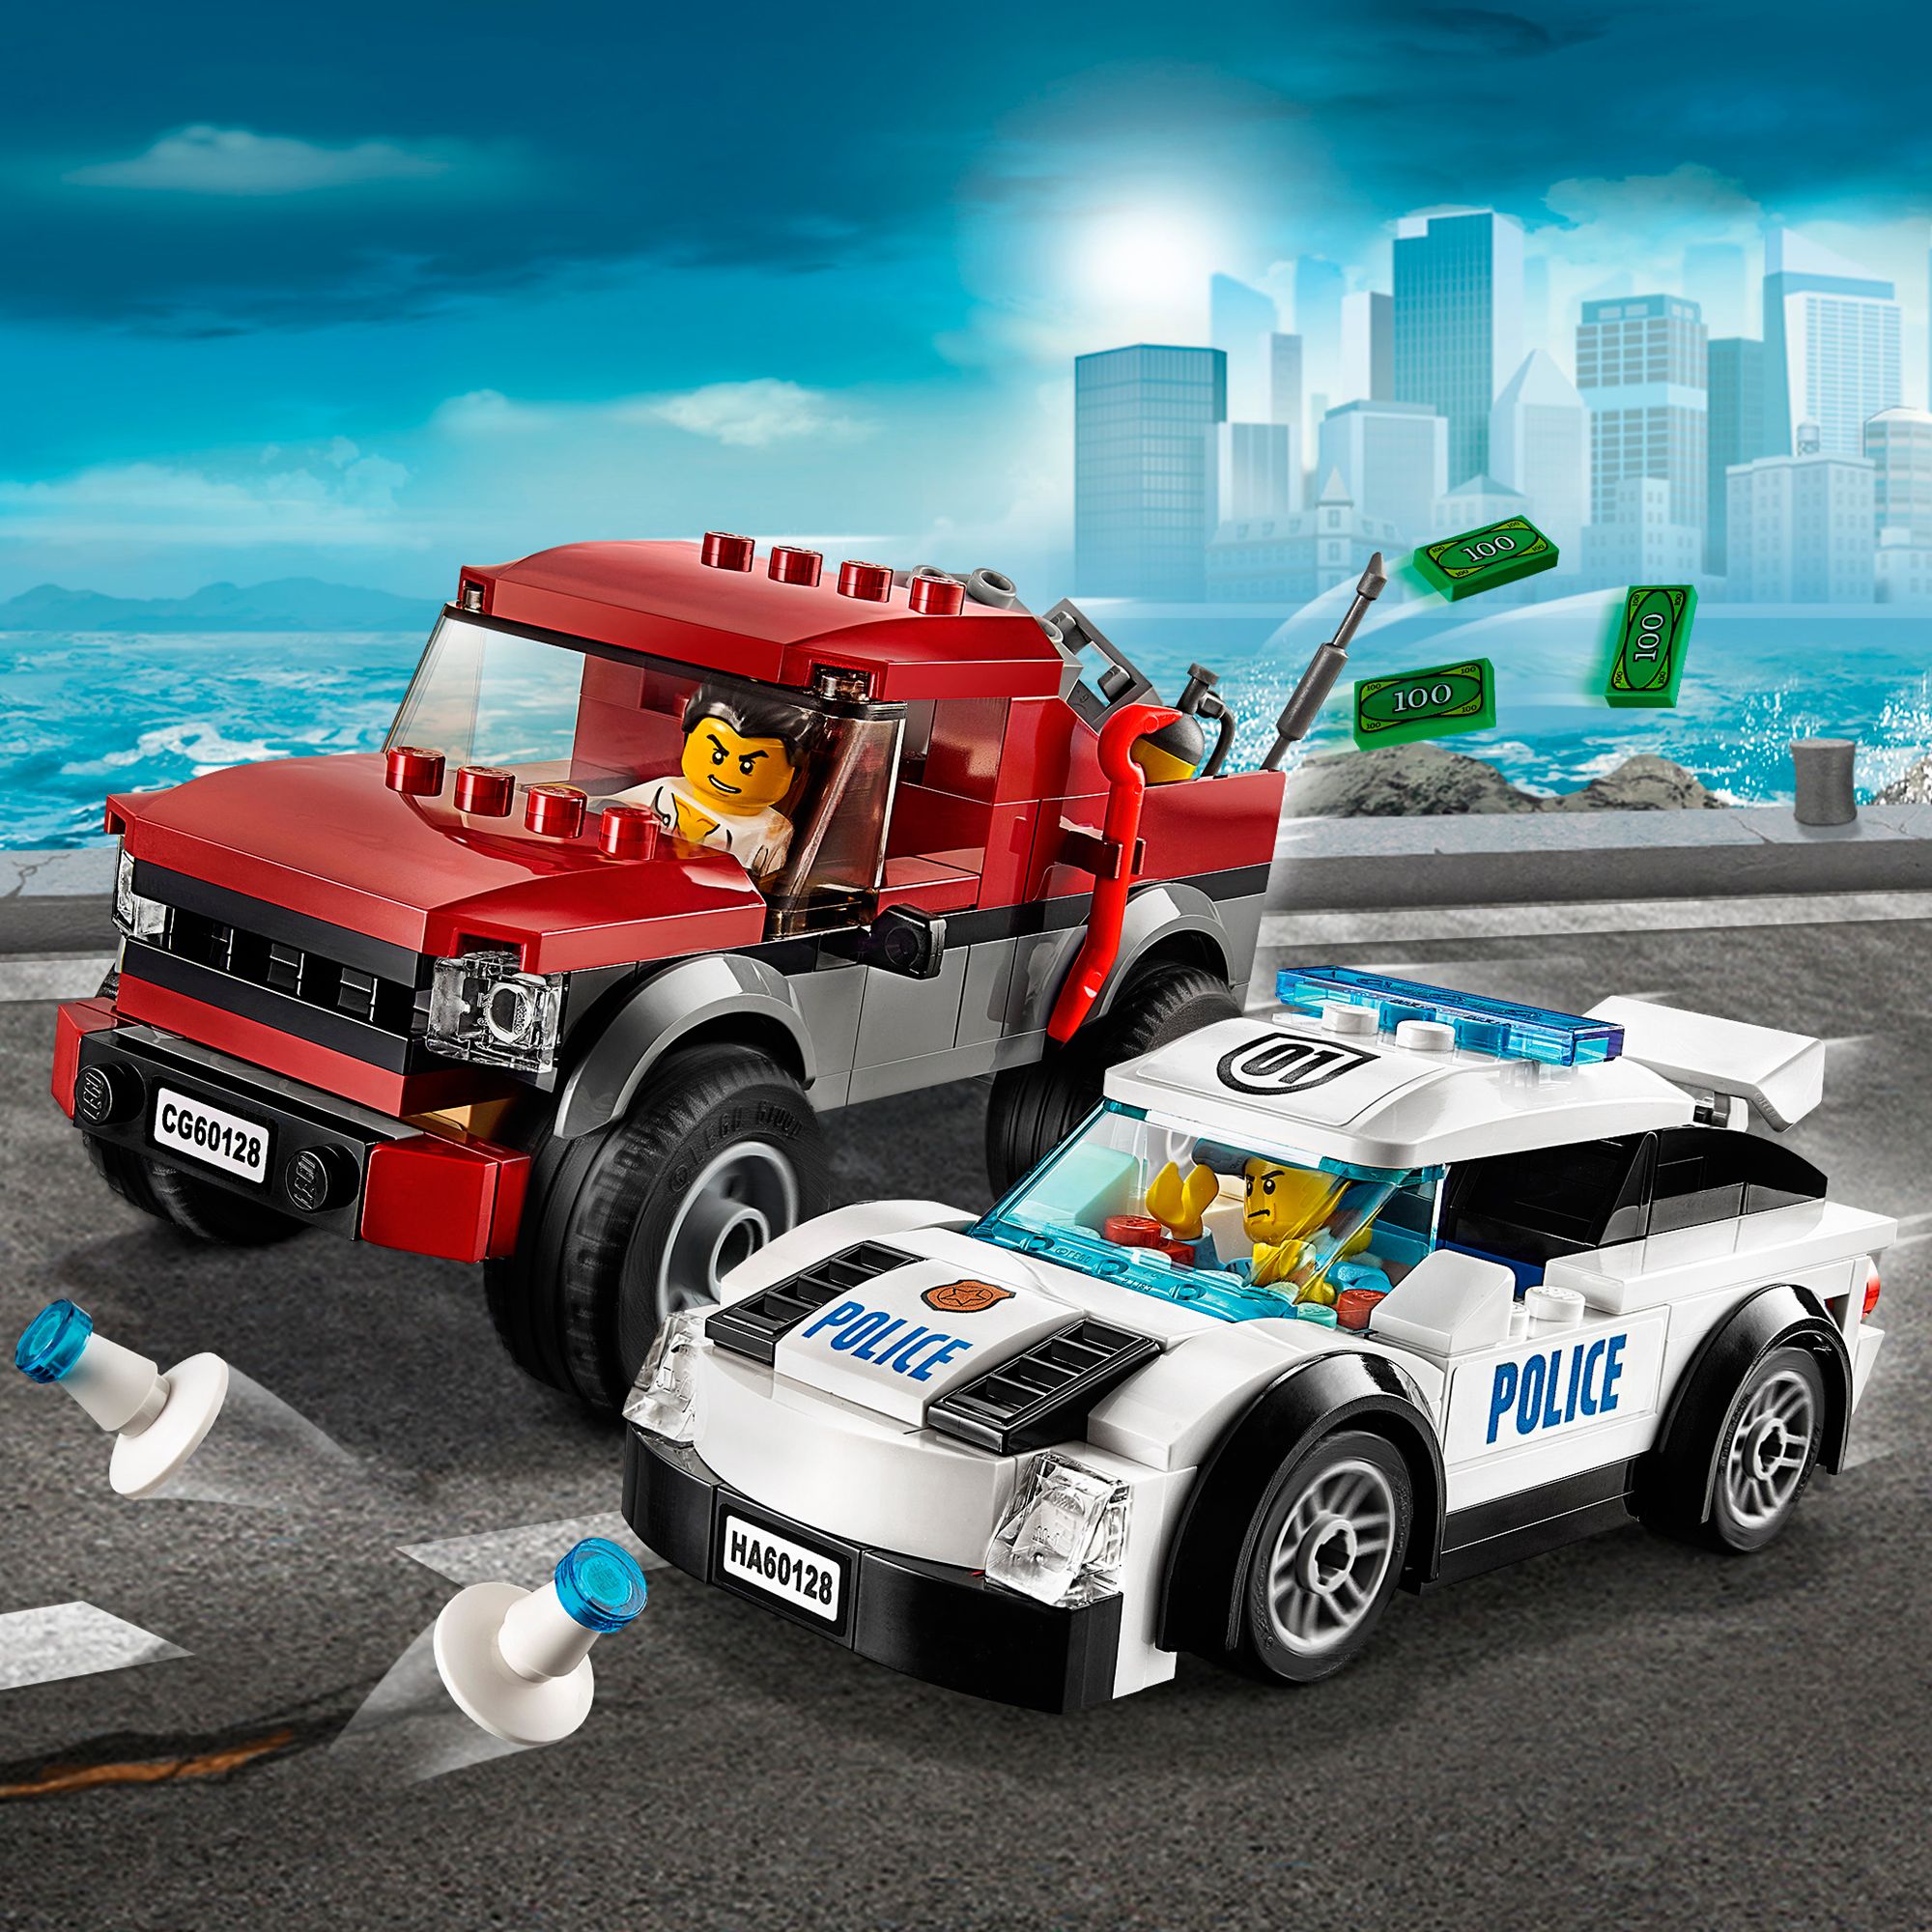 49+ Lego City Police Background